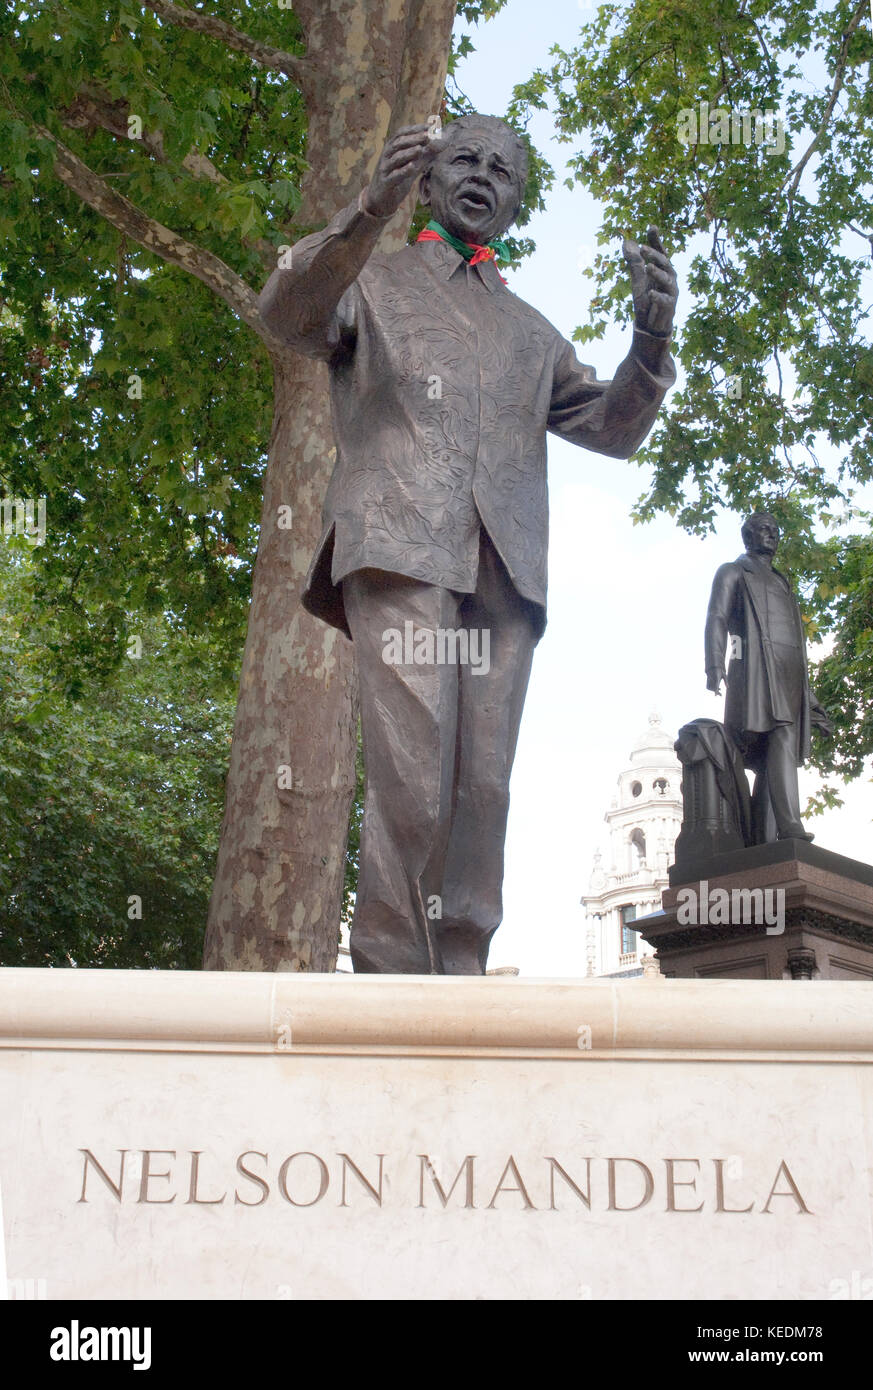 Nelson Mandela statue in Westminster, London Stock Photo